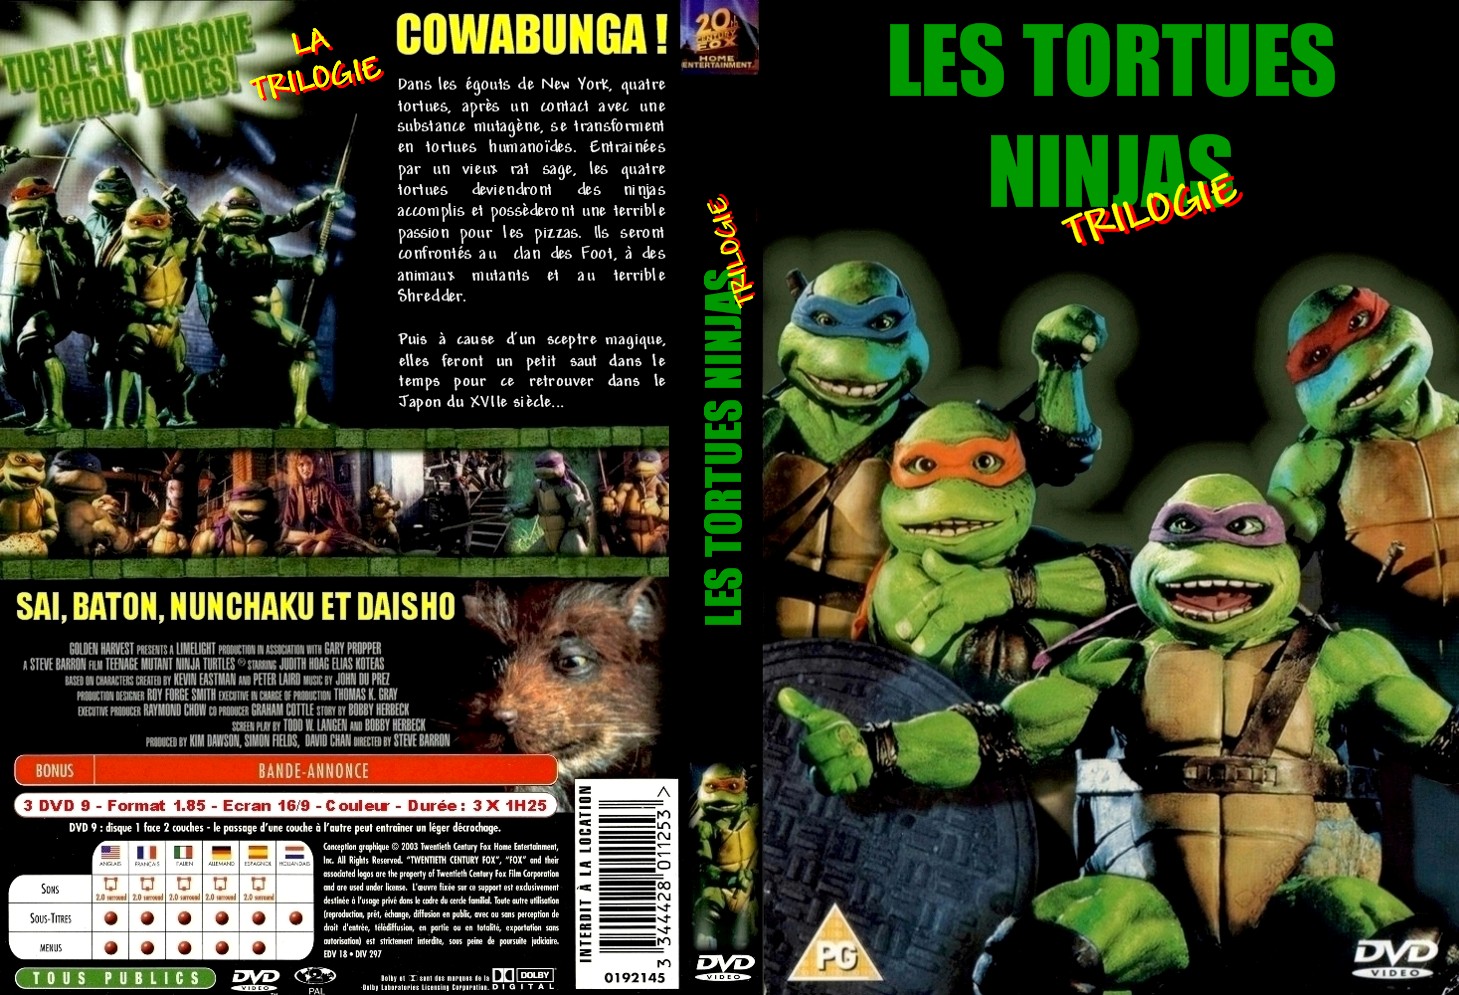 Jaquette DVD Les tortues ninjas trilogie custom